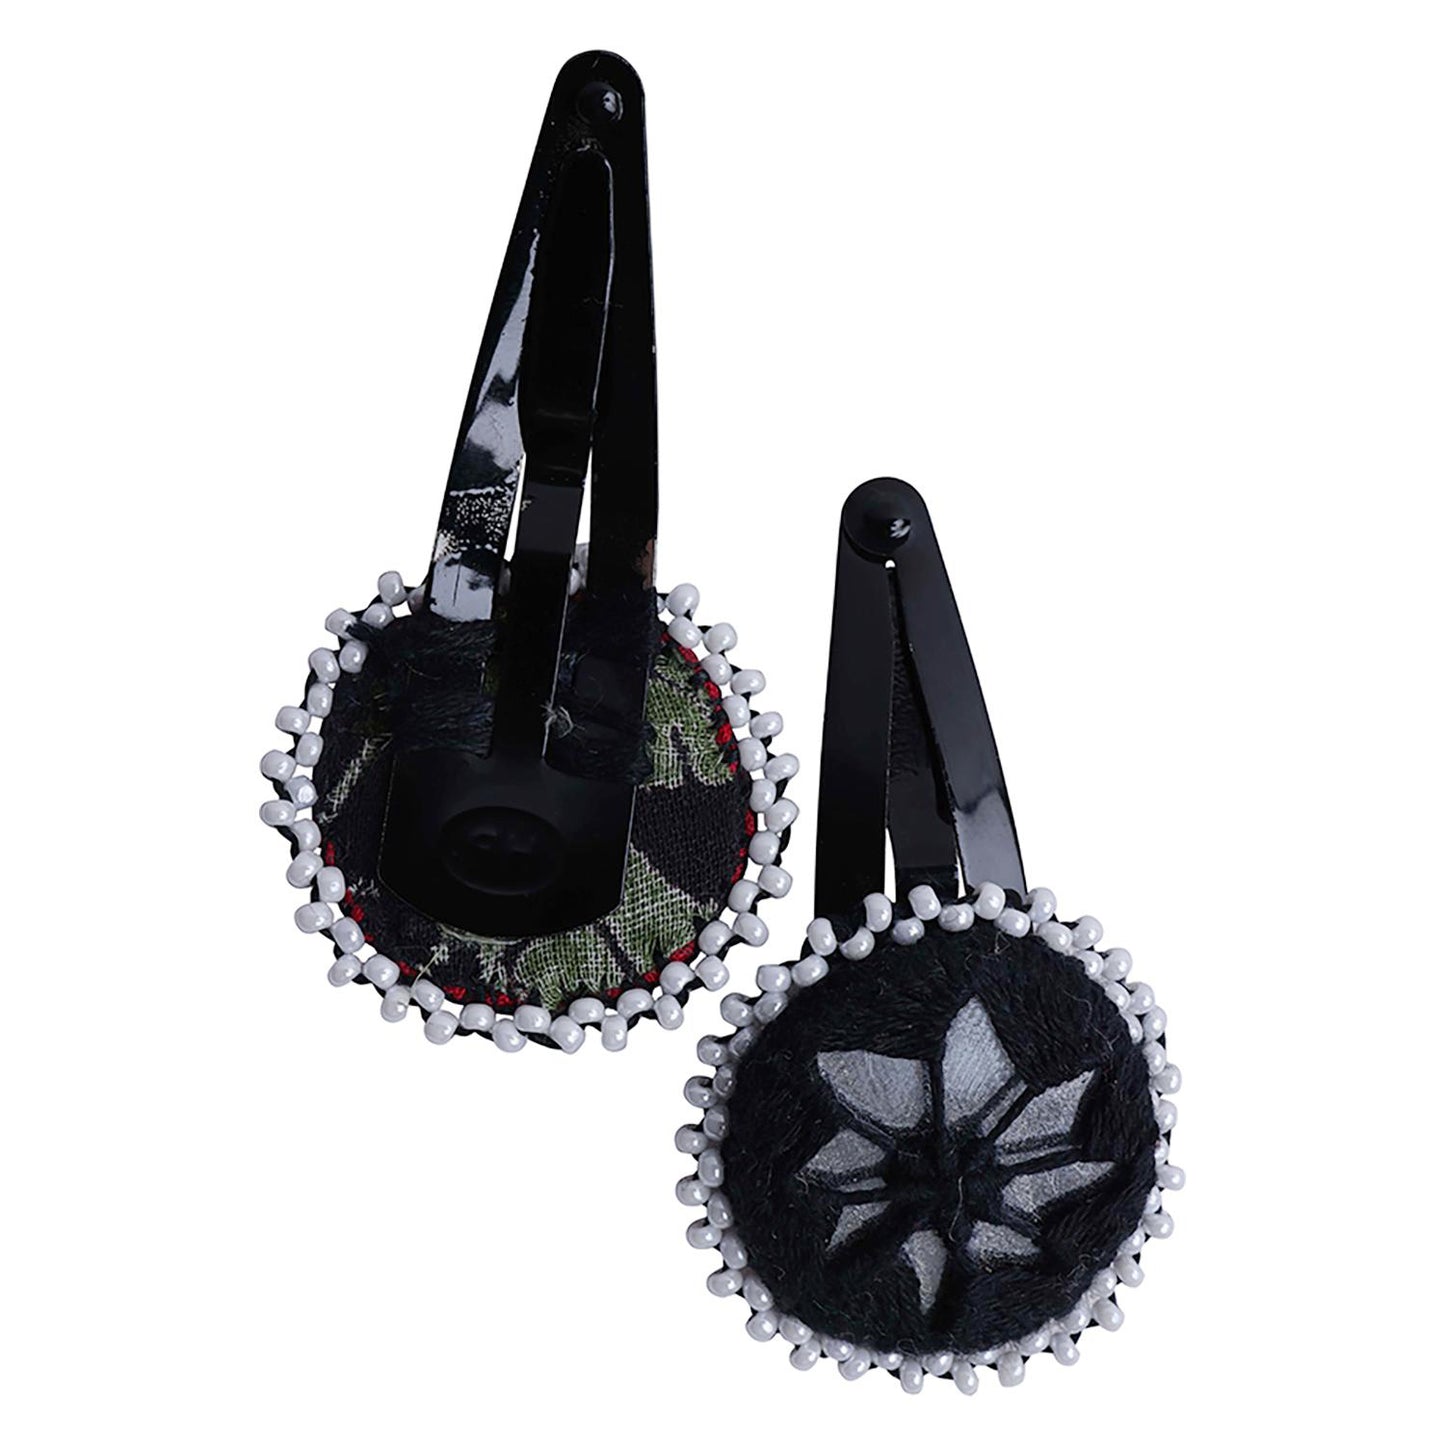 Artisanal Elegance: Handcrafted Tic Tac Pins by Divyang & Rural Women- Black.